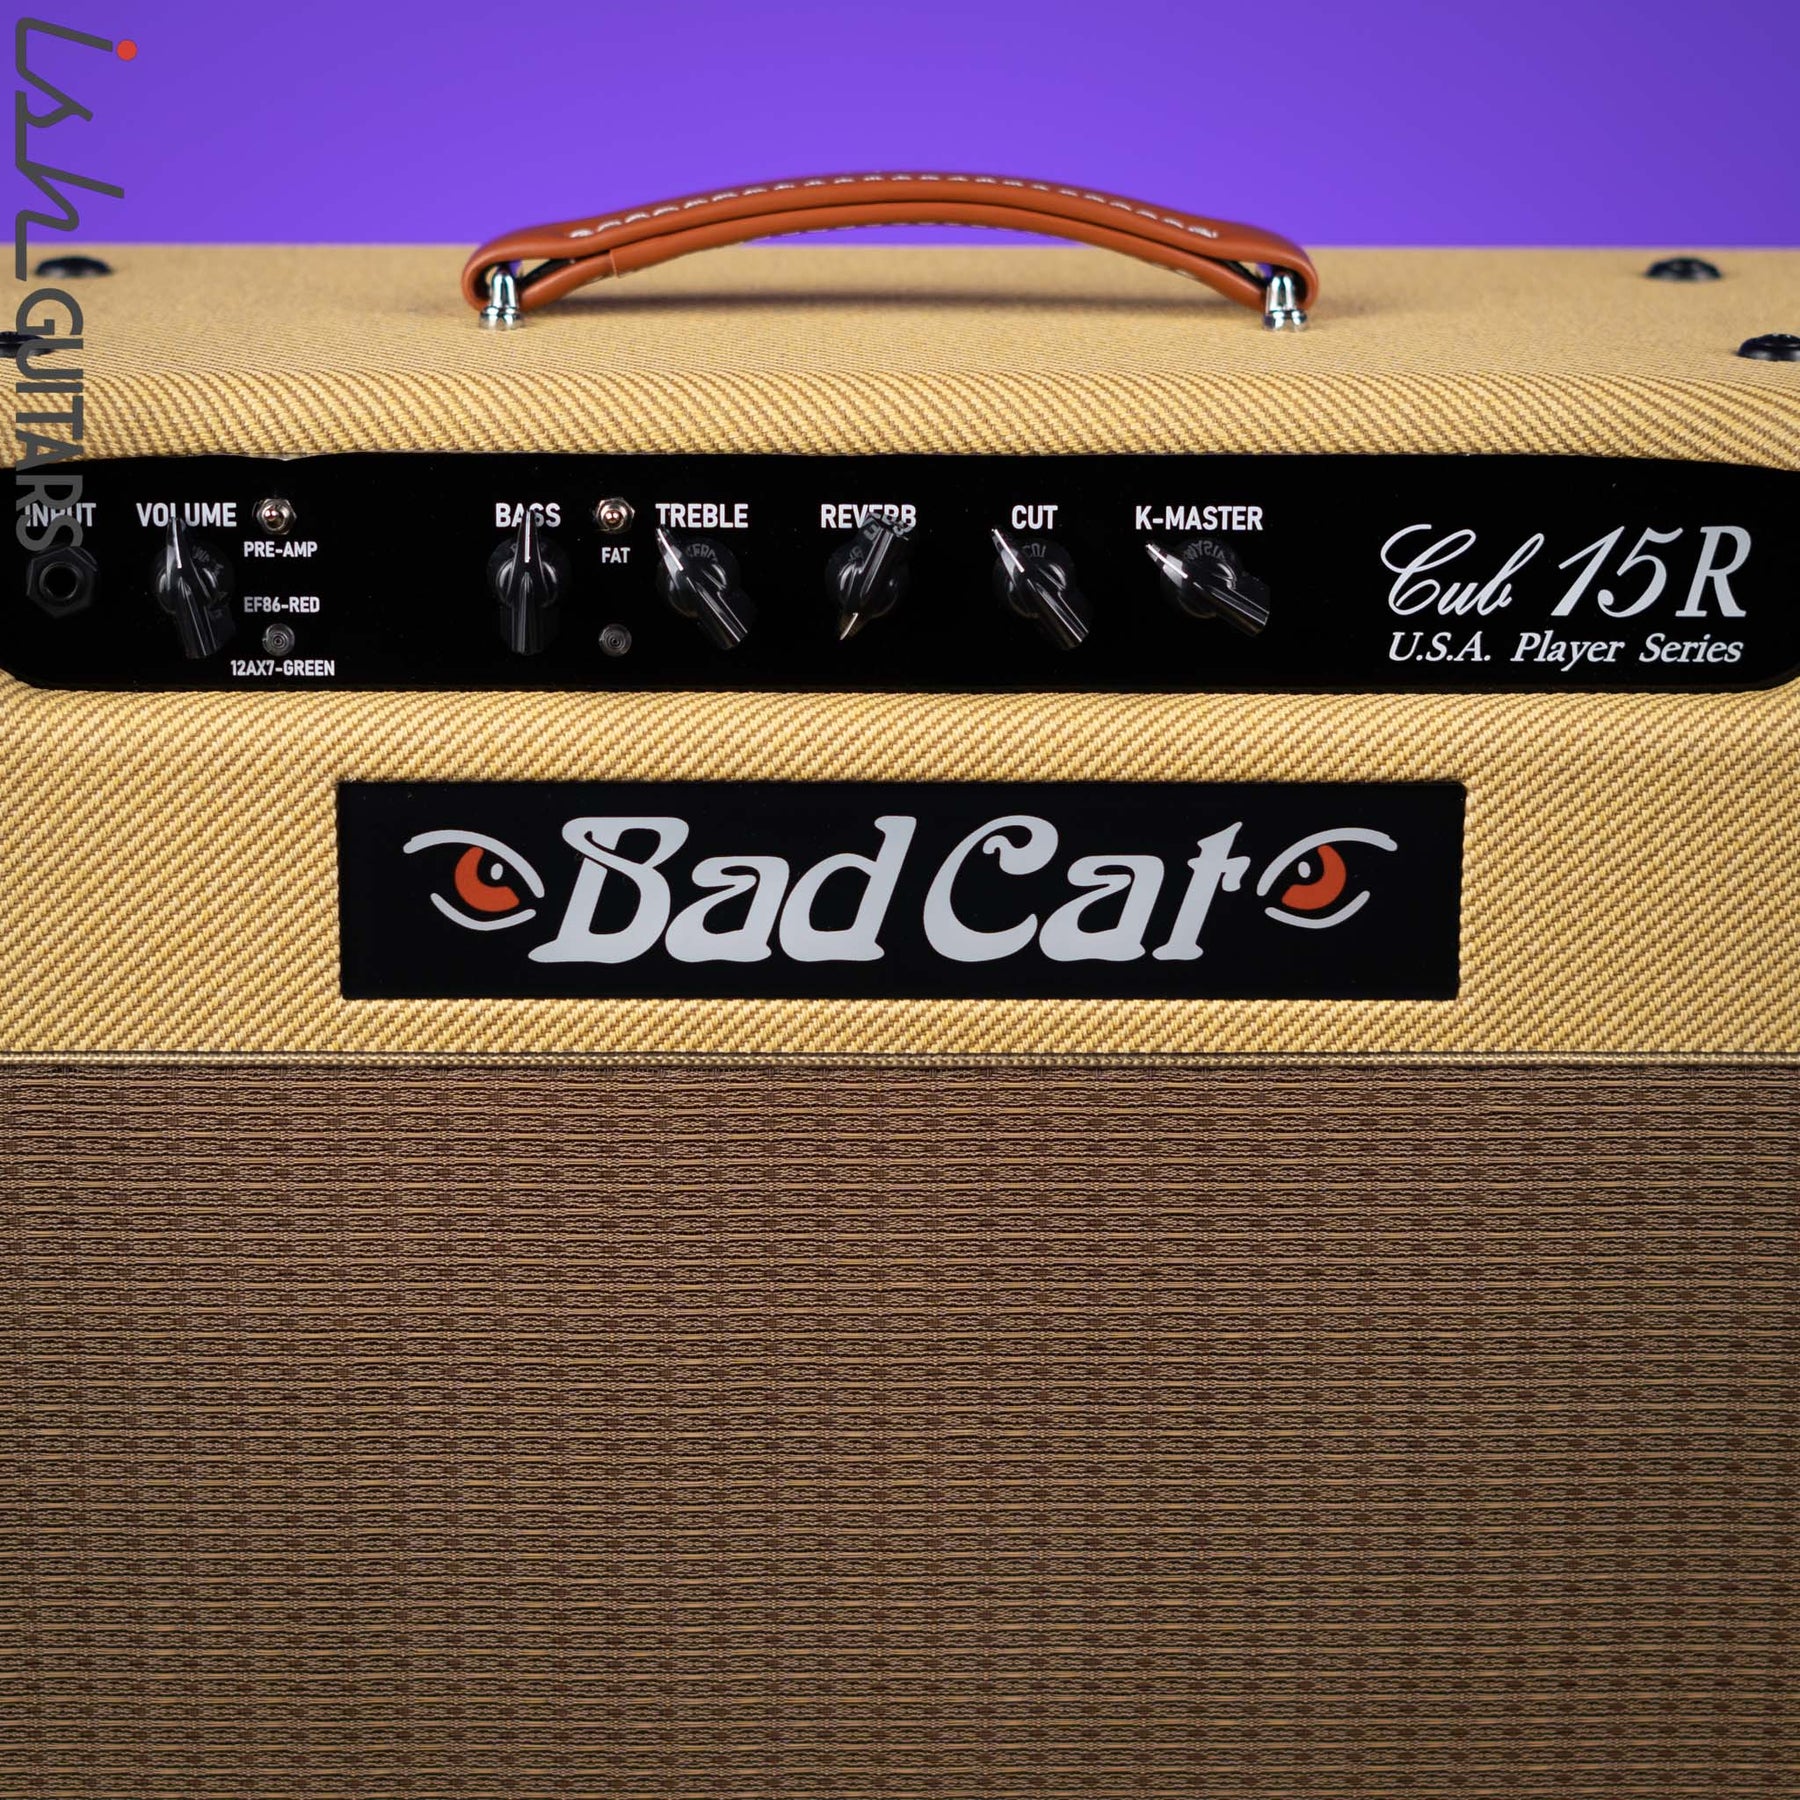 Bad Cat Cub 15R USA Player Series 15W Combo Amplifier Tweed – Ish